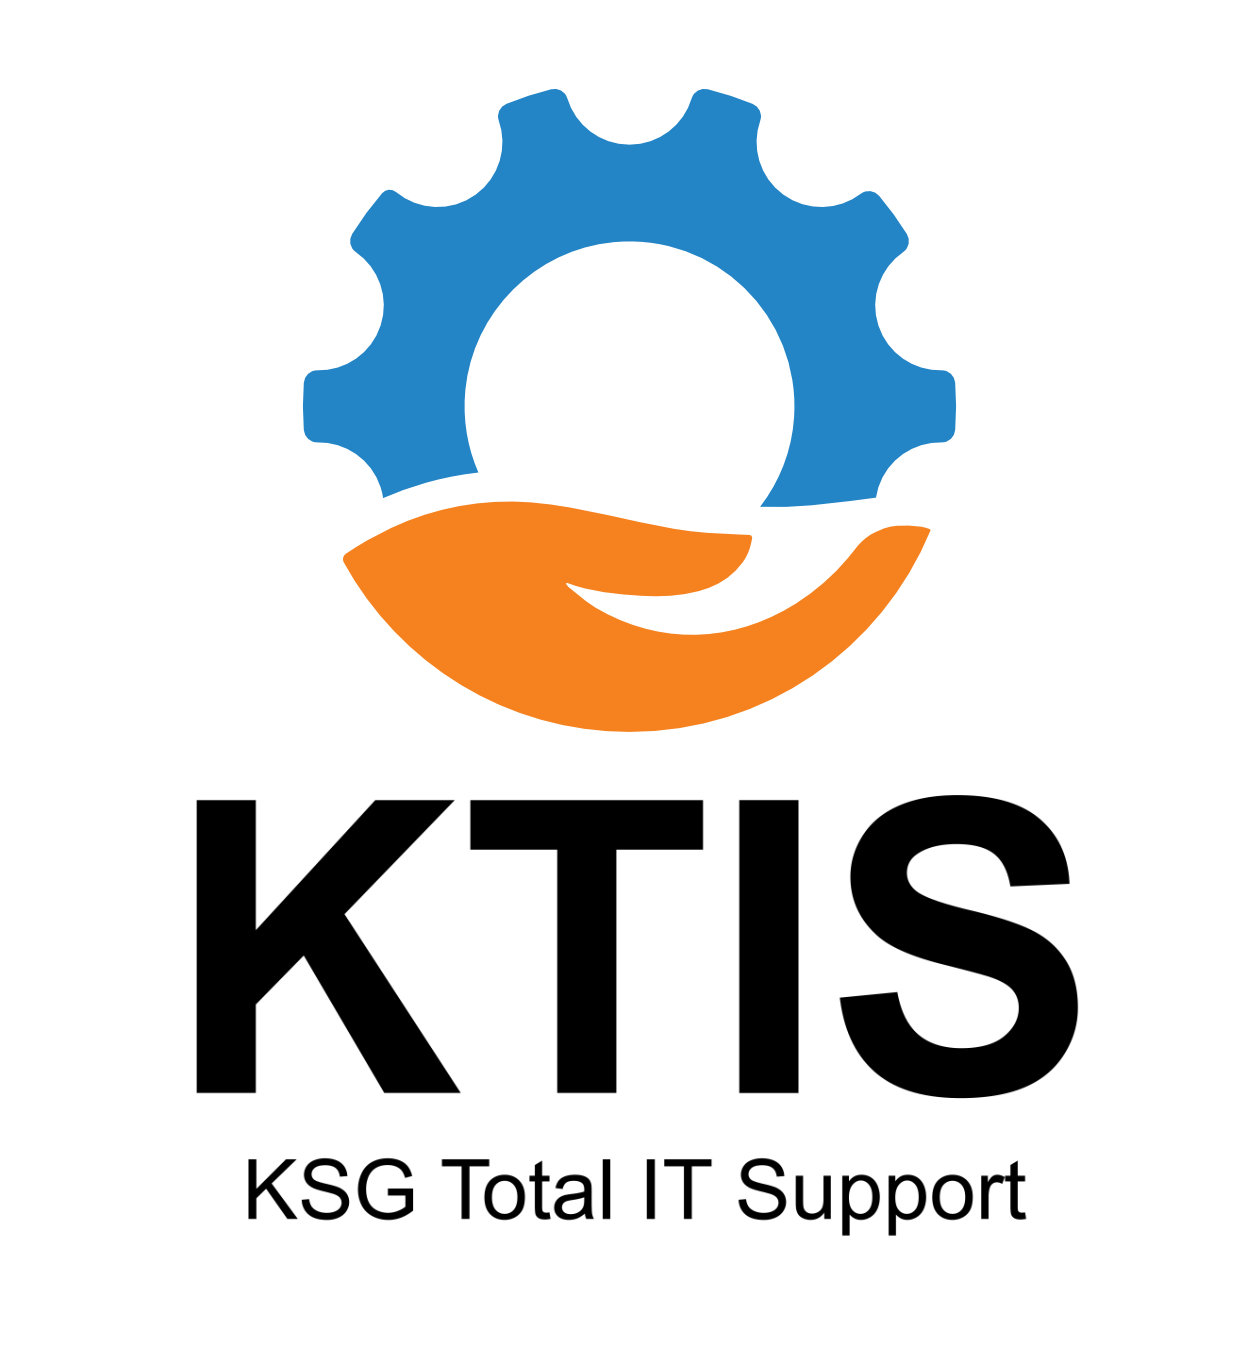 KTIS-KSG Total IT Support